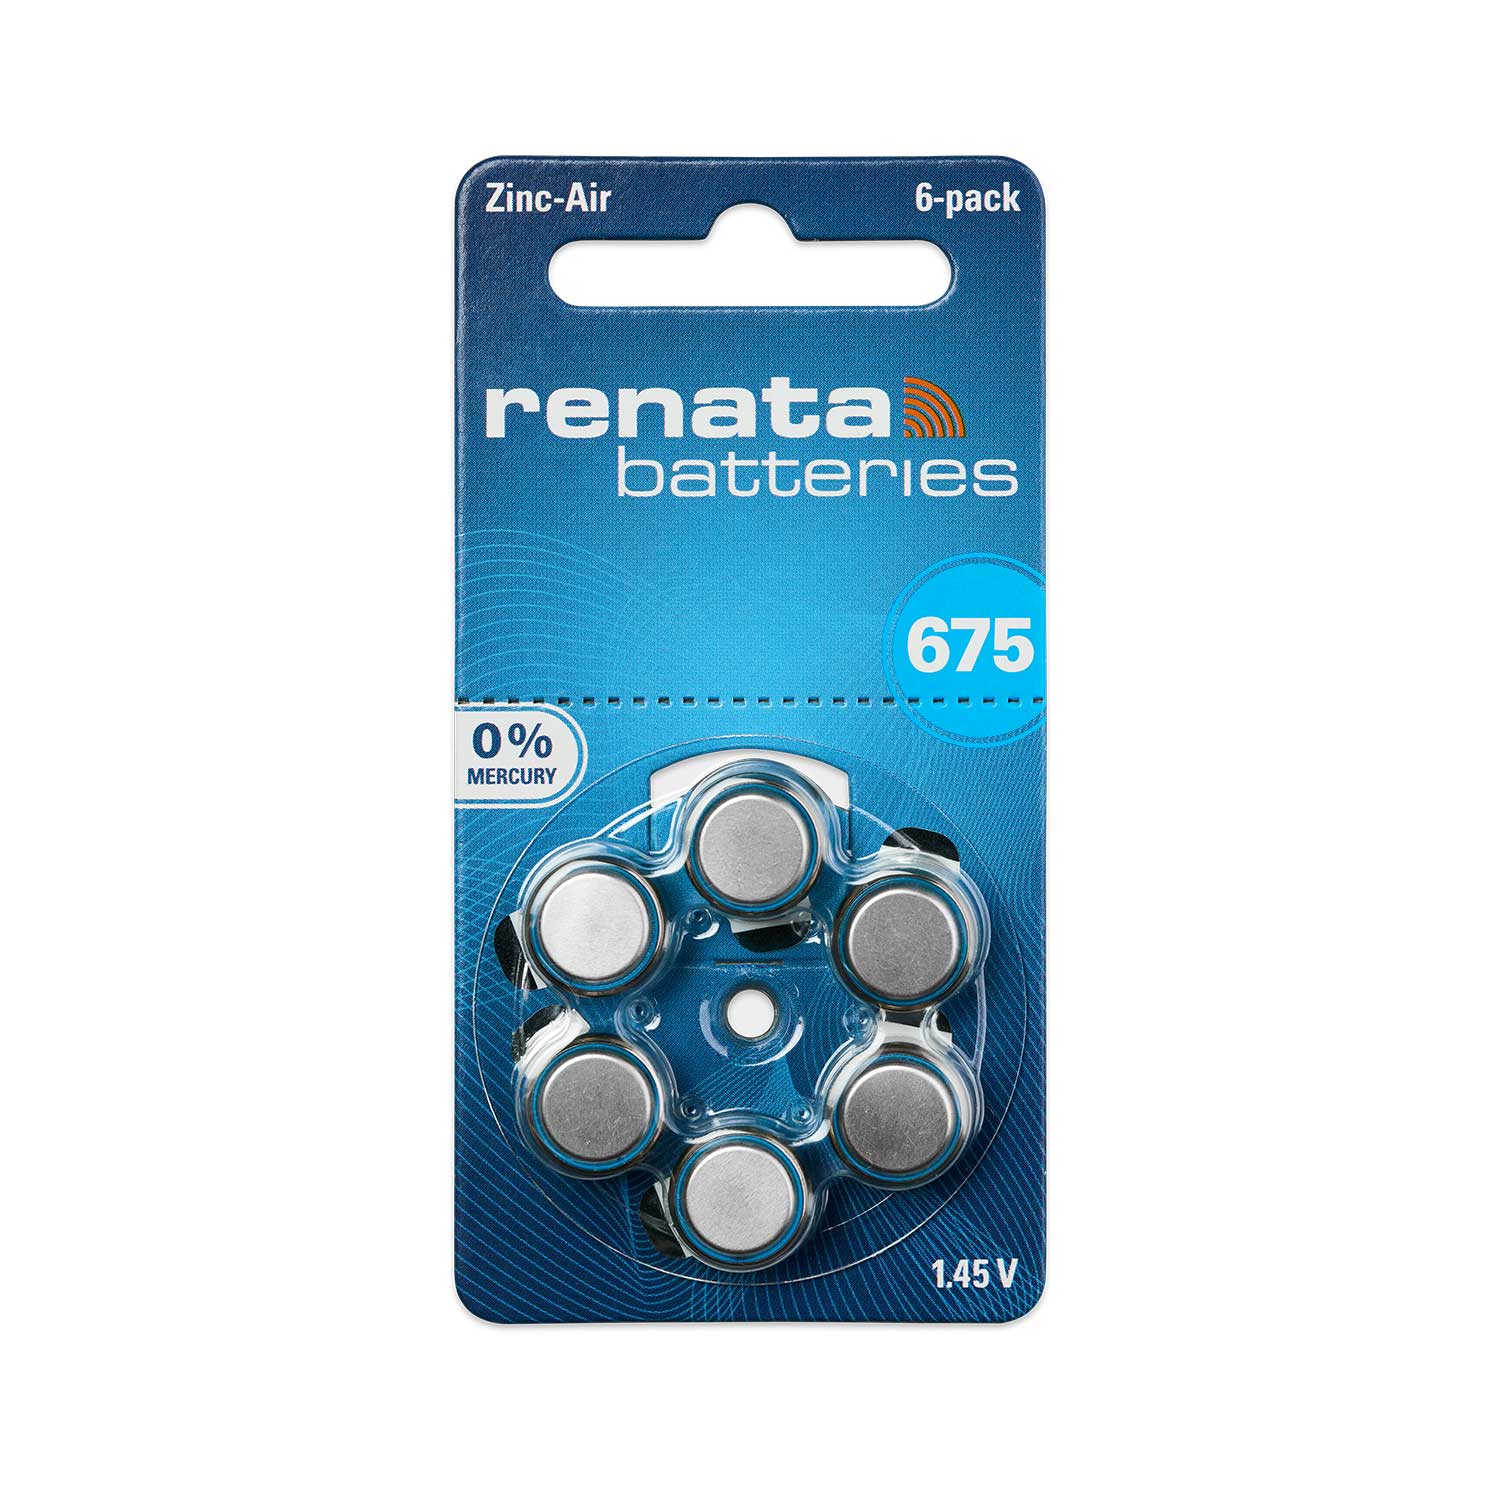 Renata 675 hearing aid button cell <br/>Brand: Renata / Manufacturer name: 675